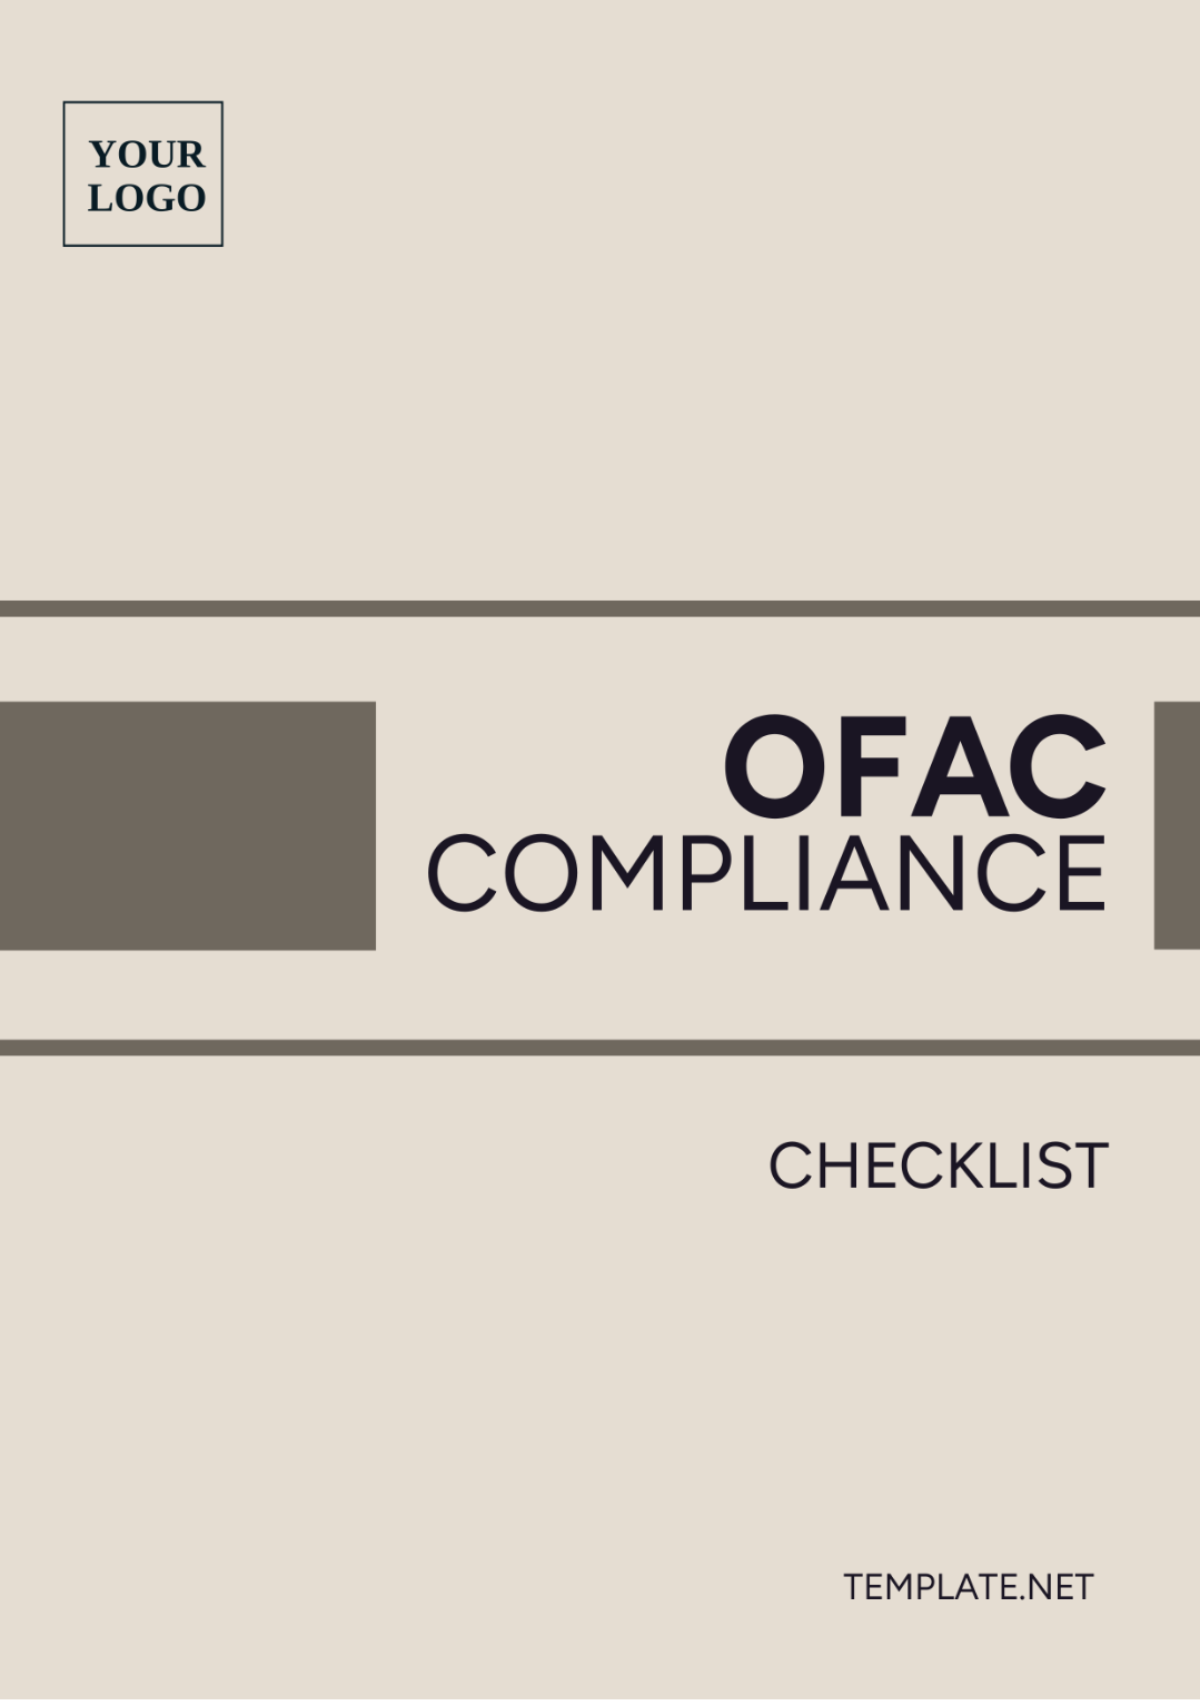 OFAC Compliance Checklist Template